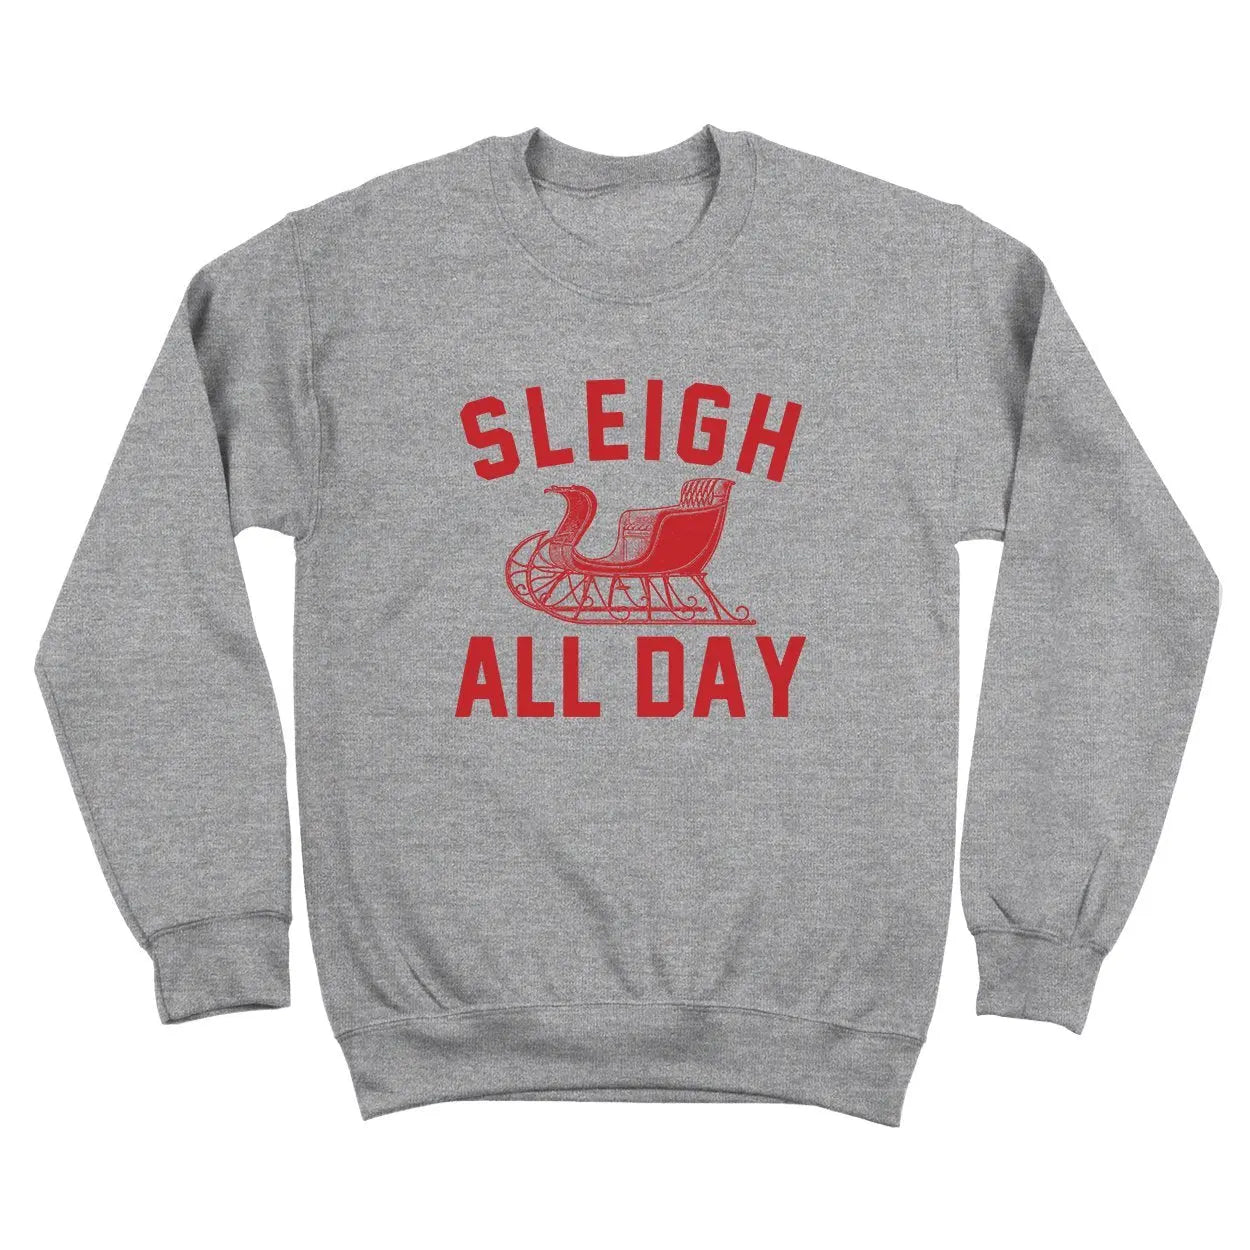 Sleigh All Day Tshirt - Donkey Tees